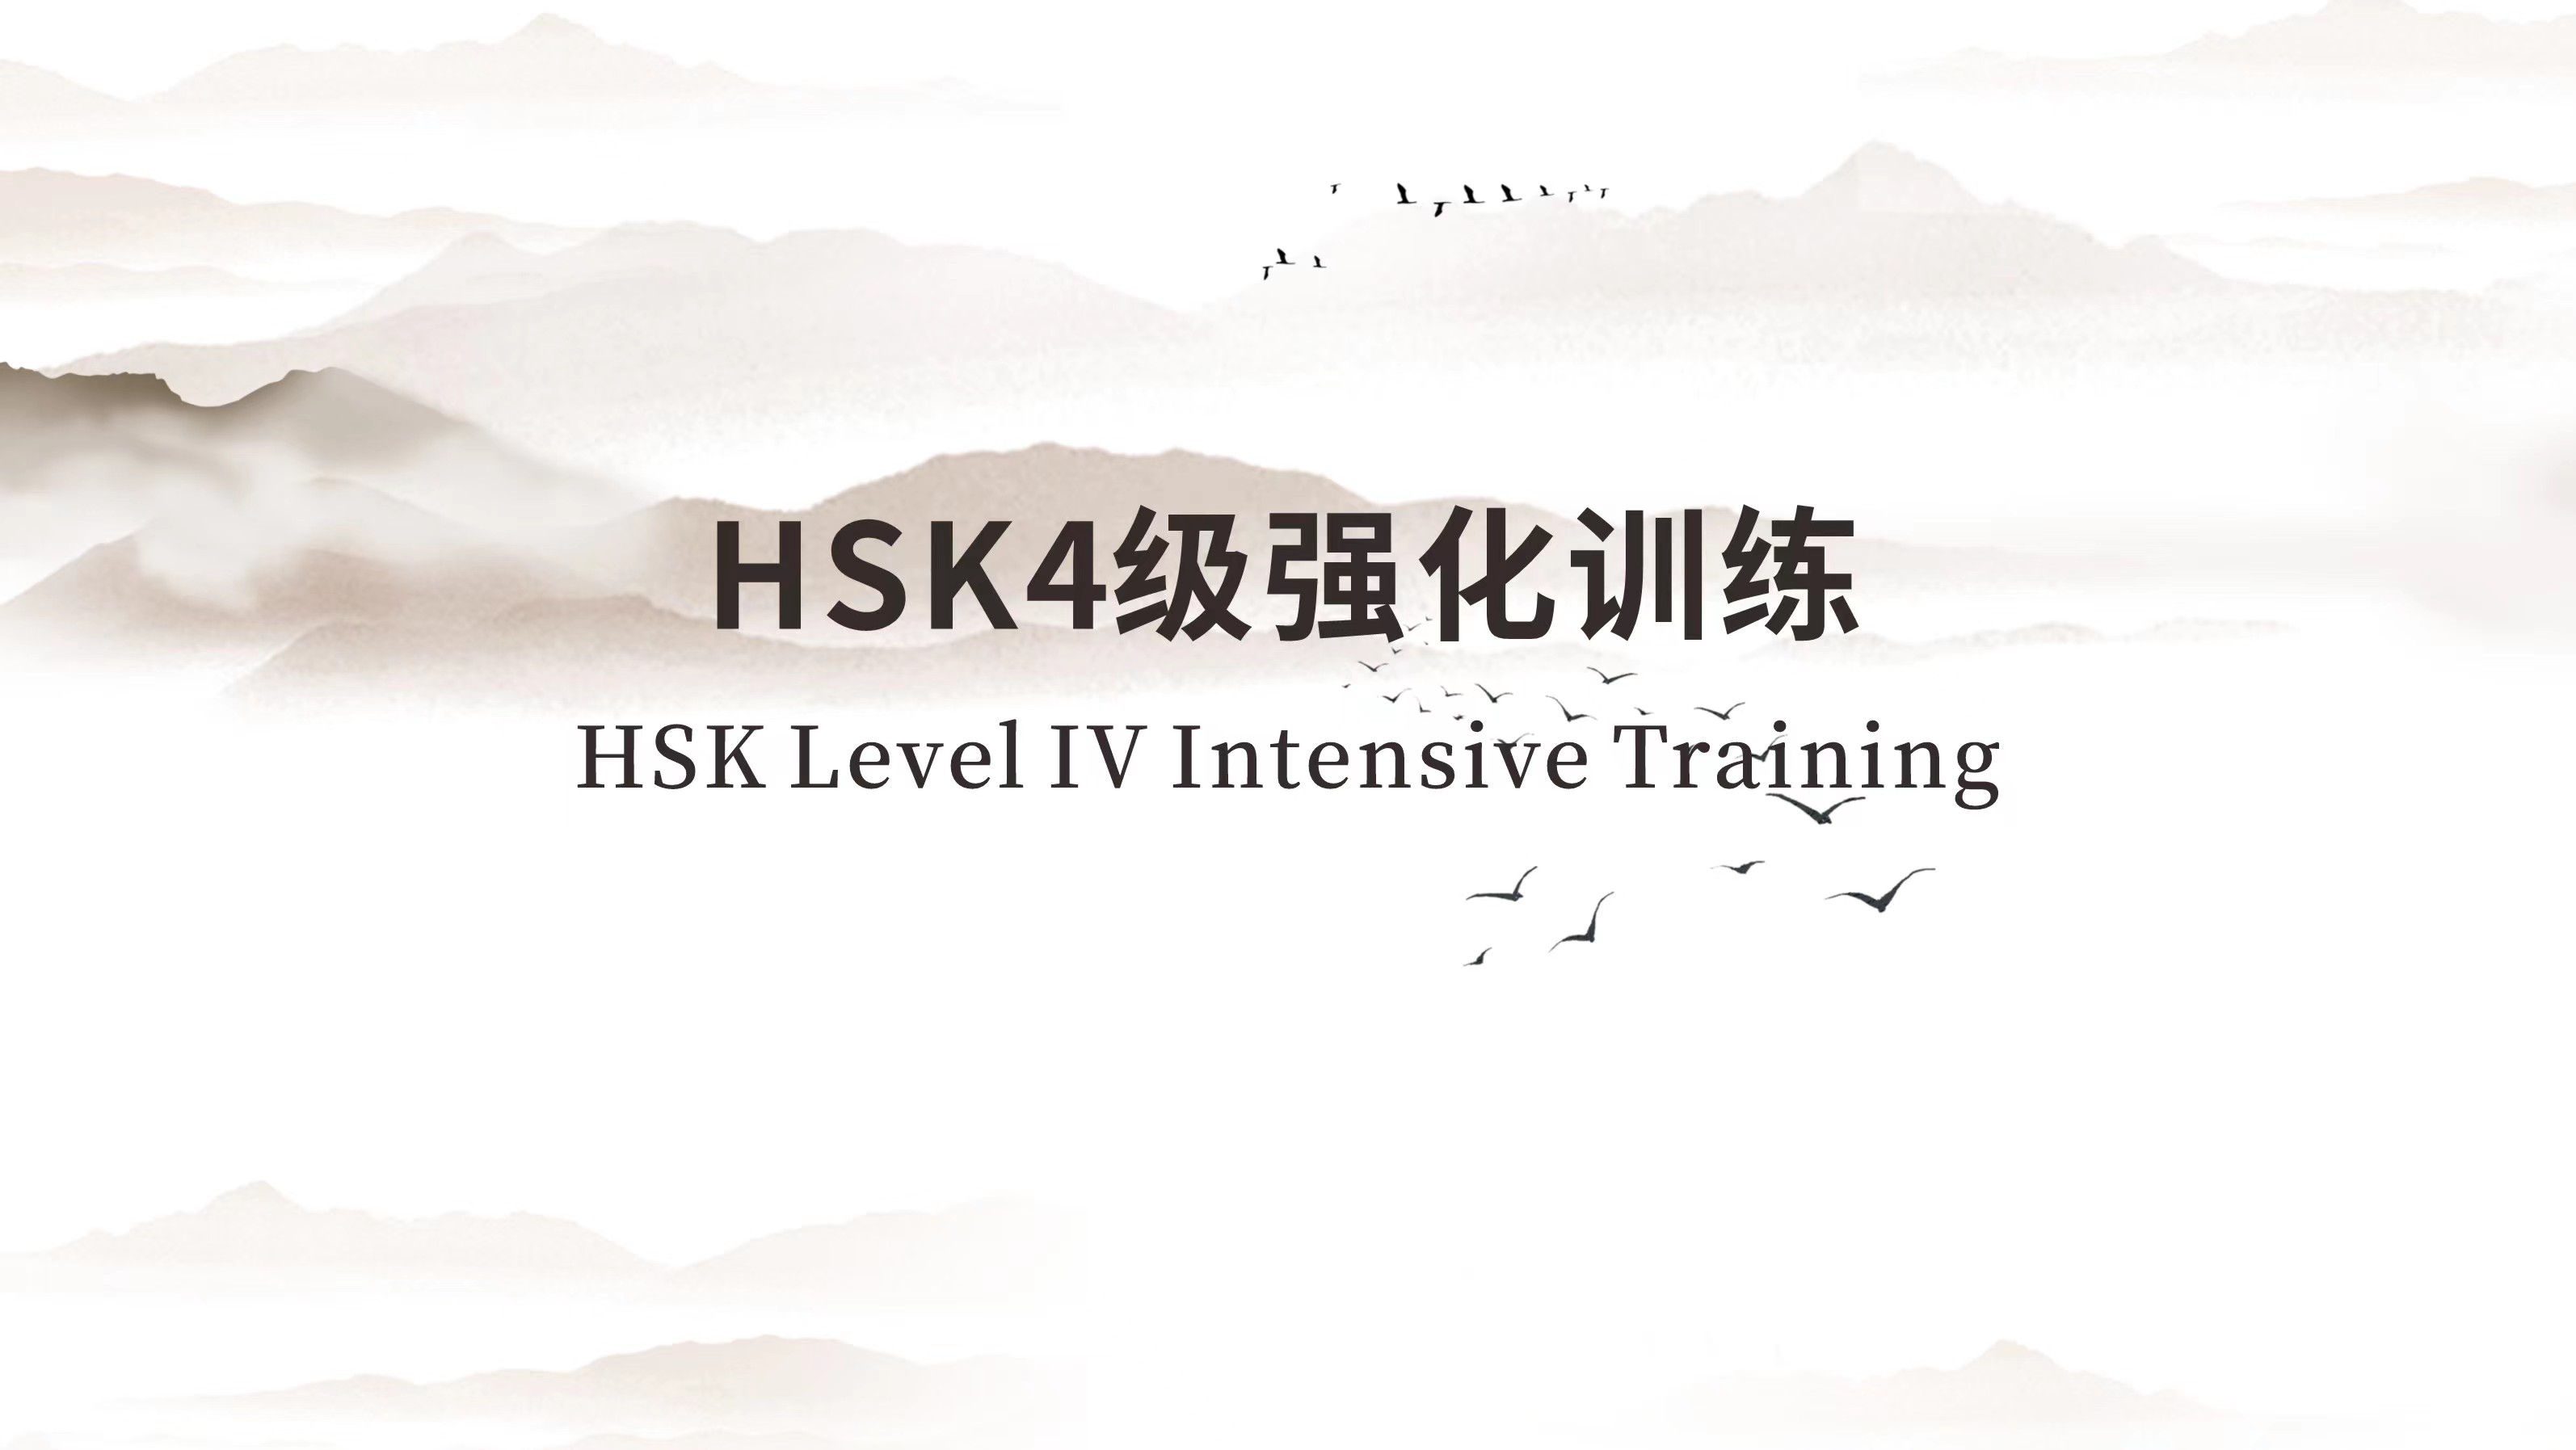 HSK Level IV Intensive Training